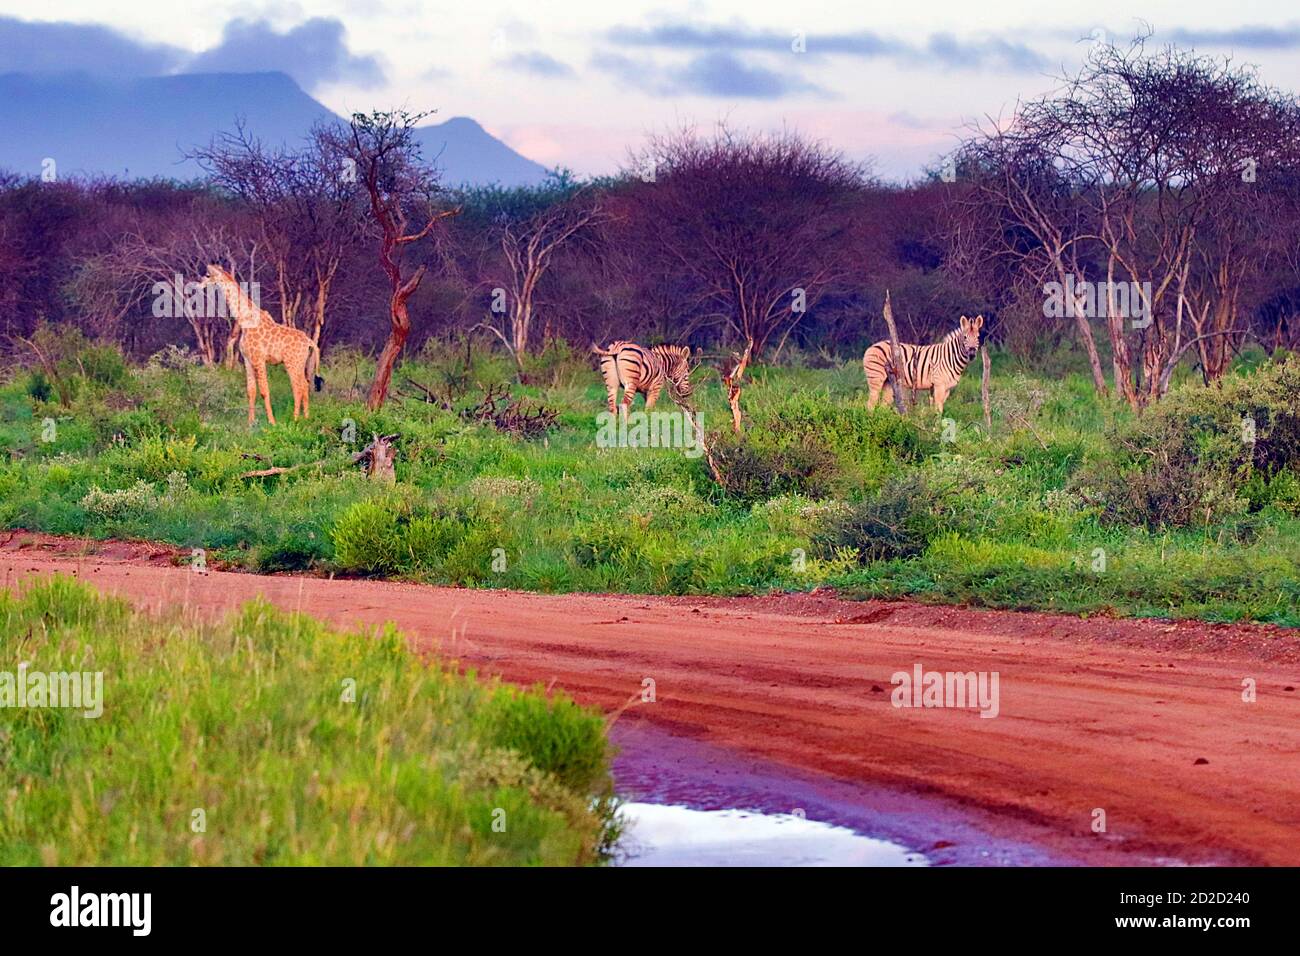 South African Giraffes (Giraffa camelopardalis giraffa) and Plains Zebras (Equus quagga) by the road at Erindi Reserve, Erongo Region, Namibia. Stock Photo